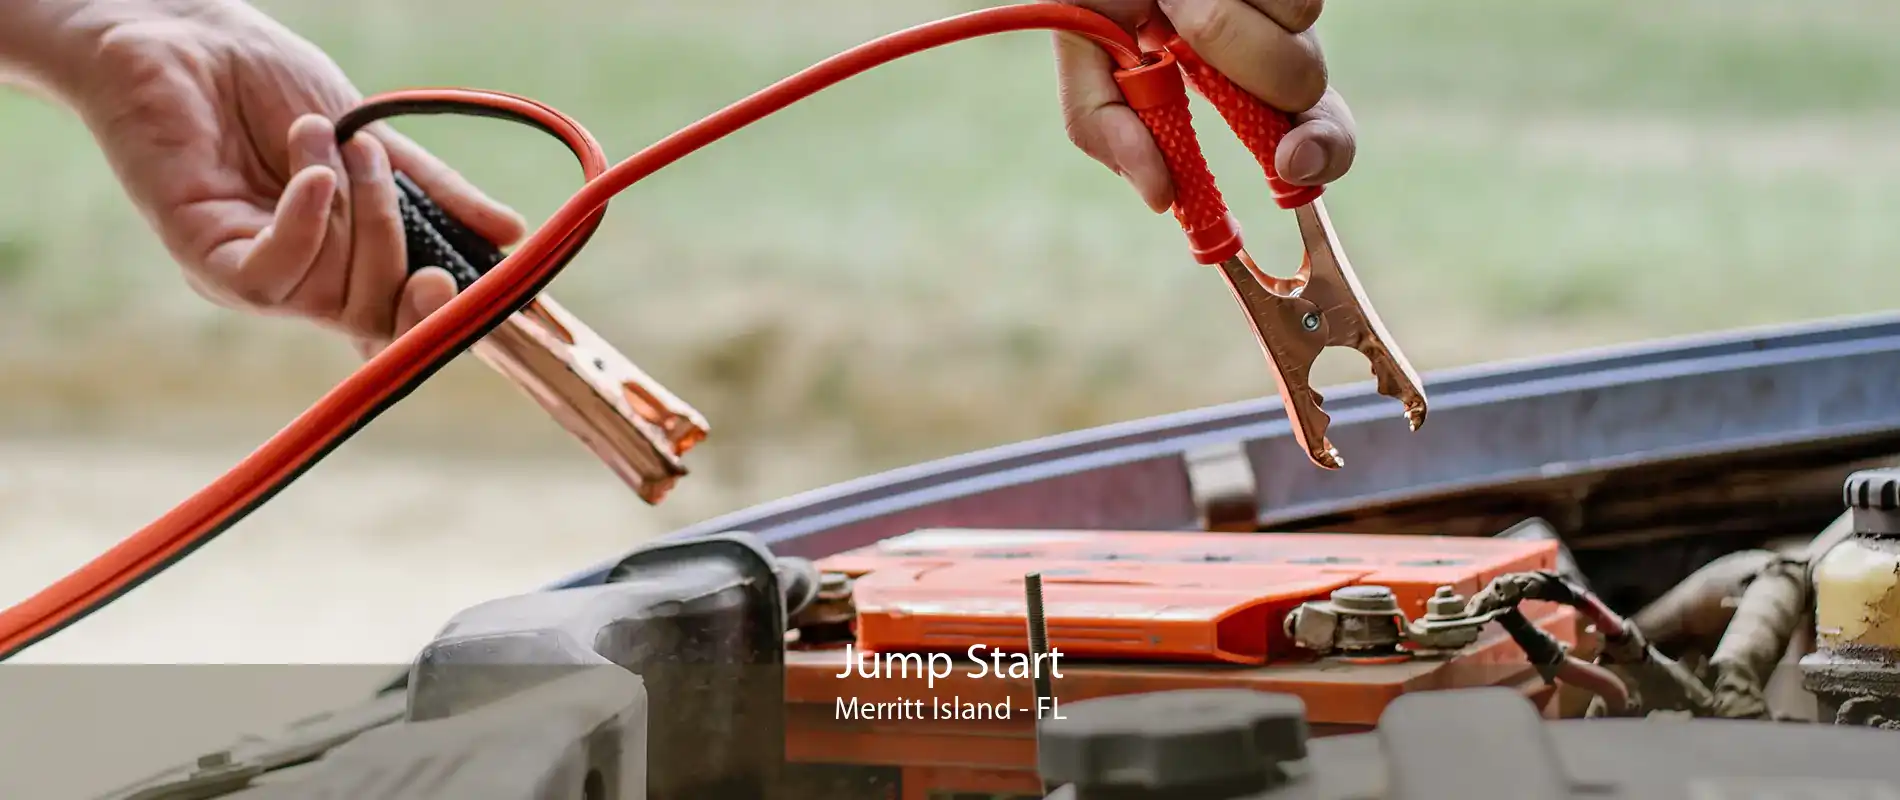 Jump Start Merritt Island - FL